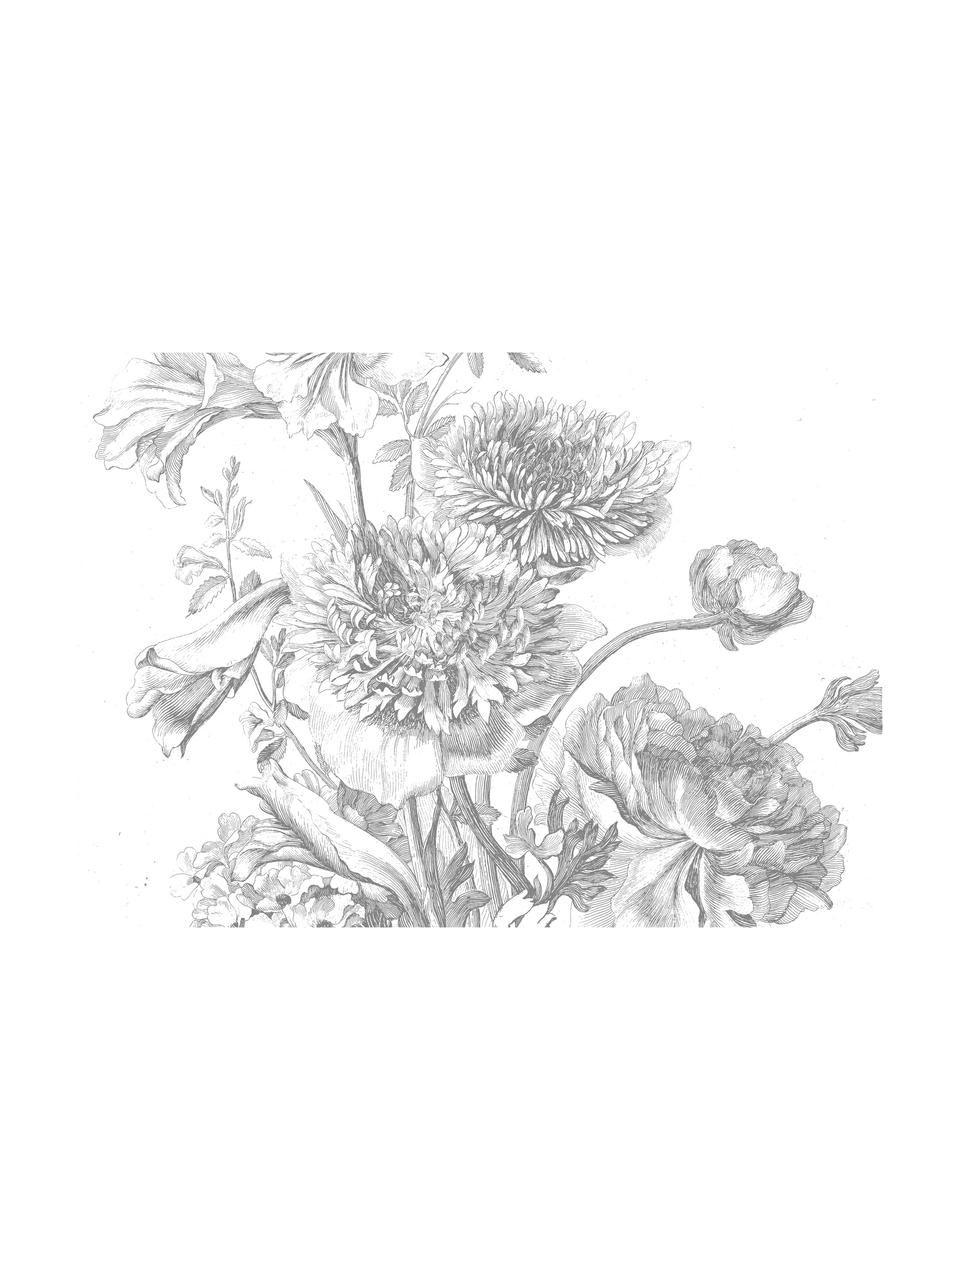 Adesivo murale Engraved Flowers, Tessuto non tessuto, ecologico e biodegradabile, Grigio, bianco, Larg. 389 x Alt. 280 cm